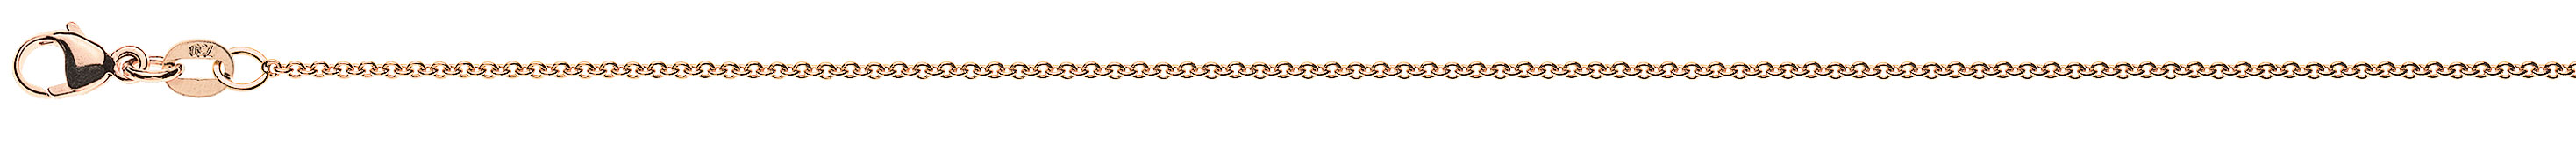 AURONOS Prestige Necklace Rose Gold 18K Round Anchor 60cm 1.3mm